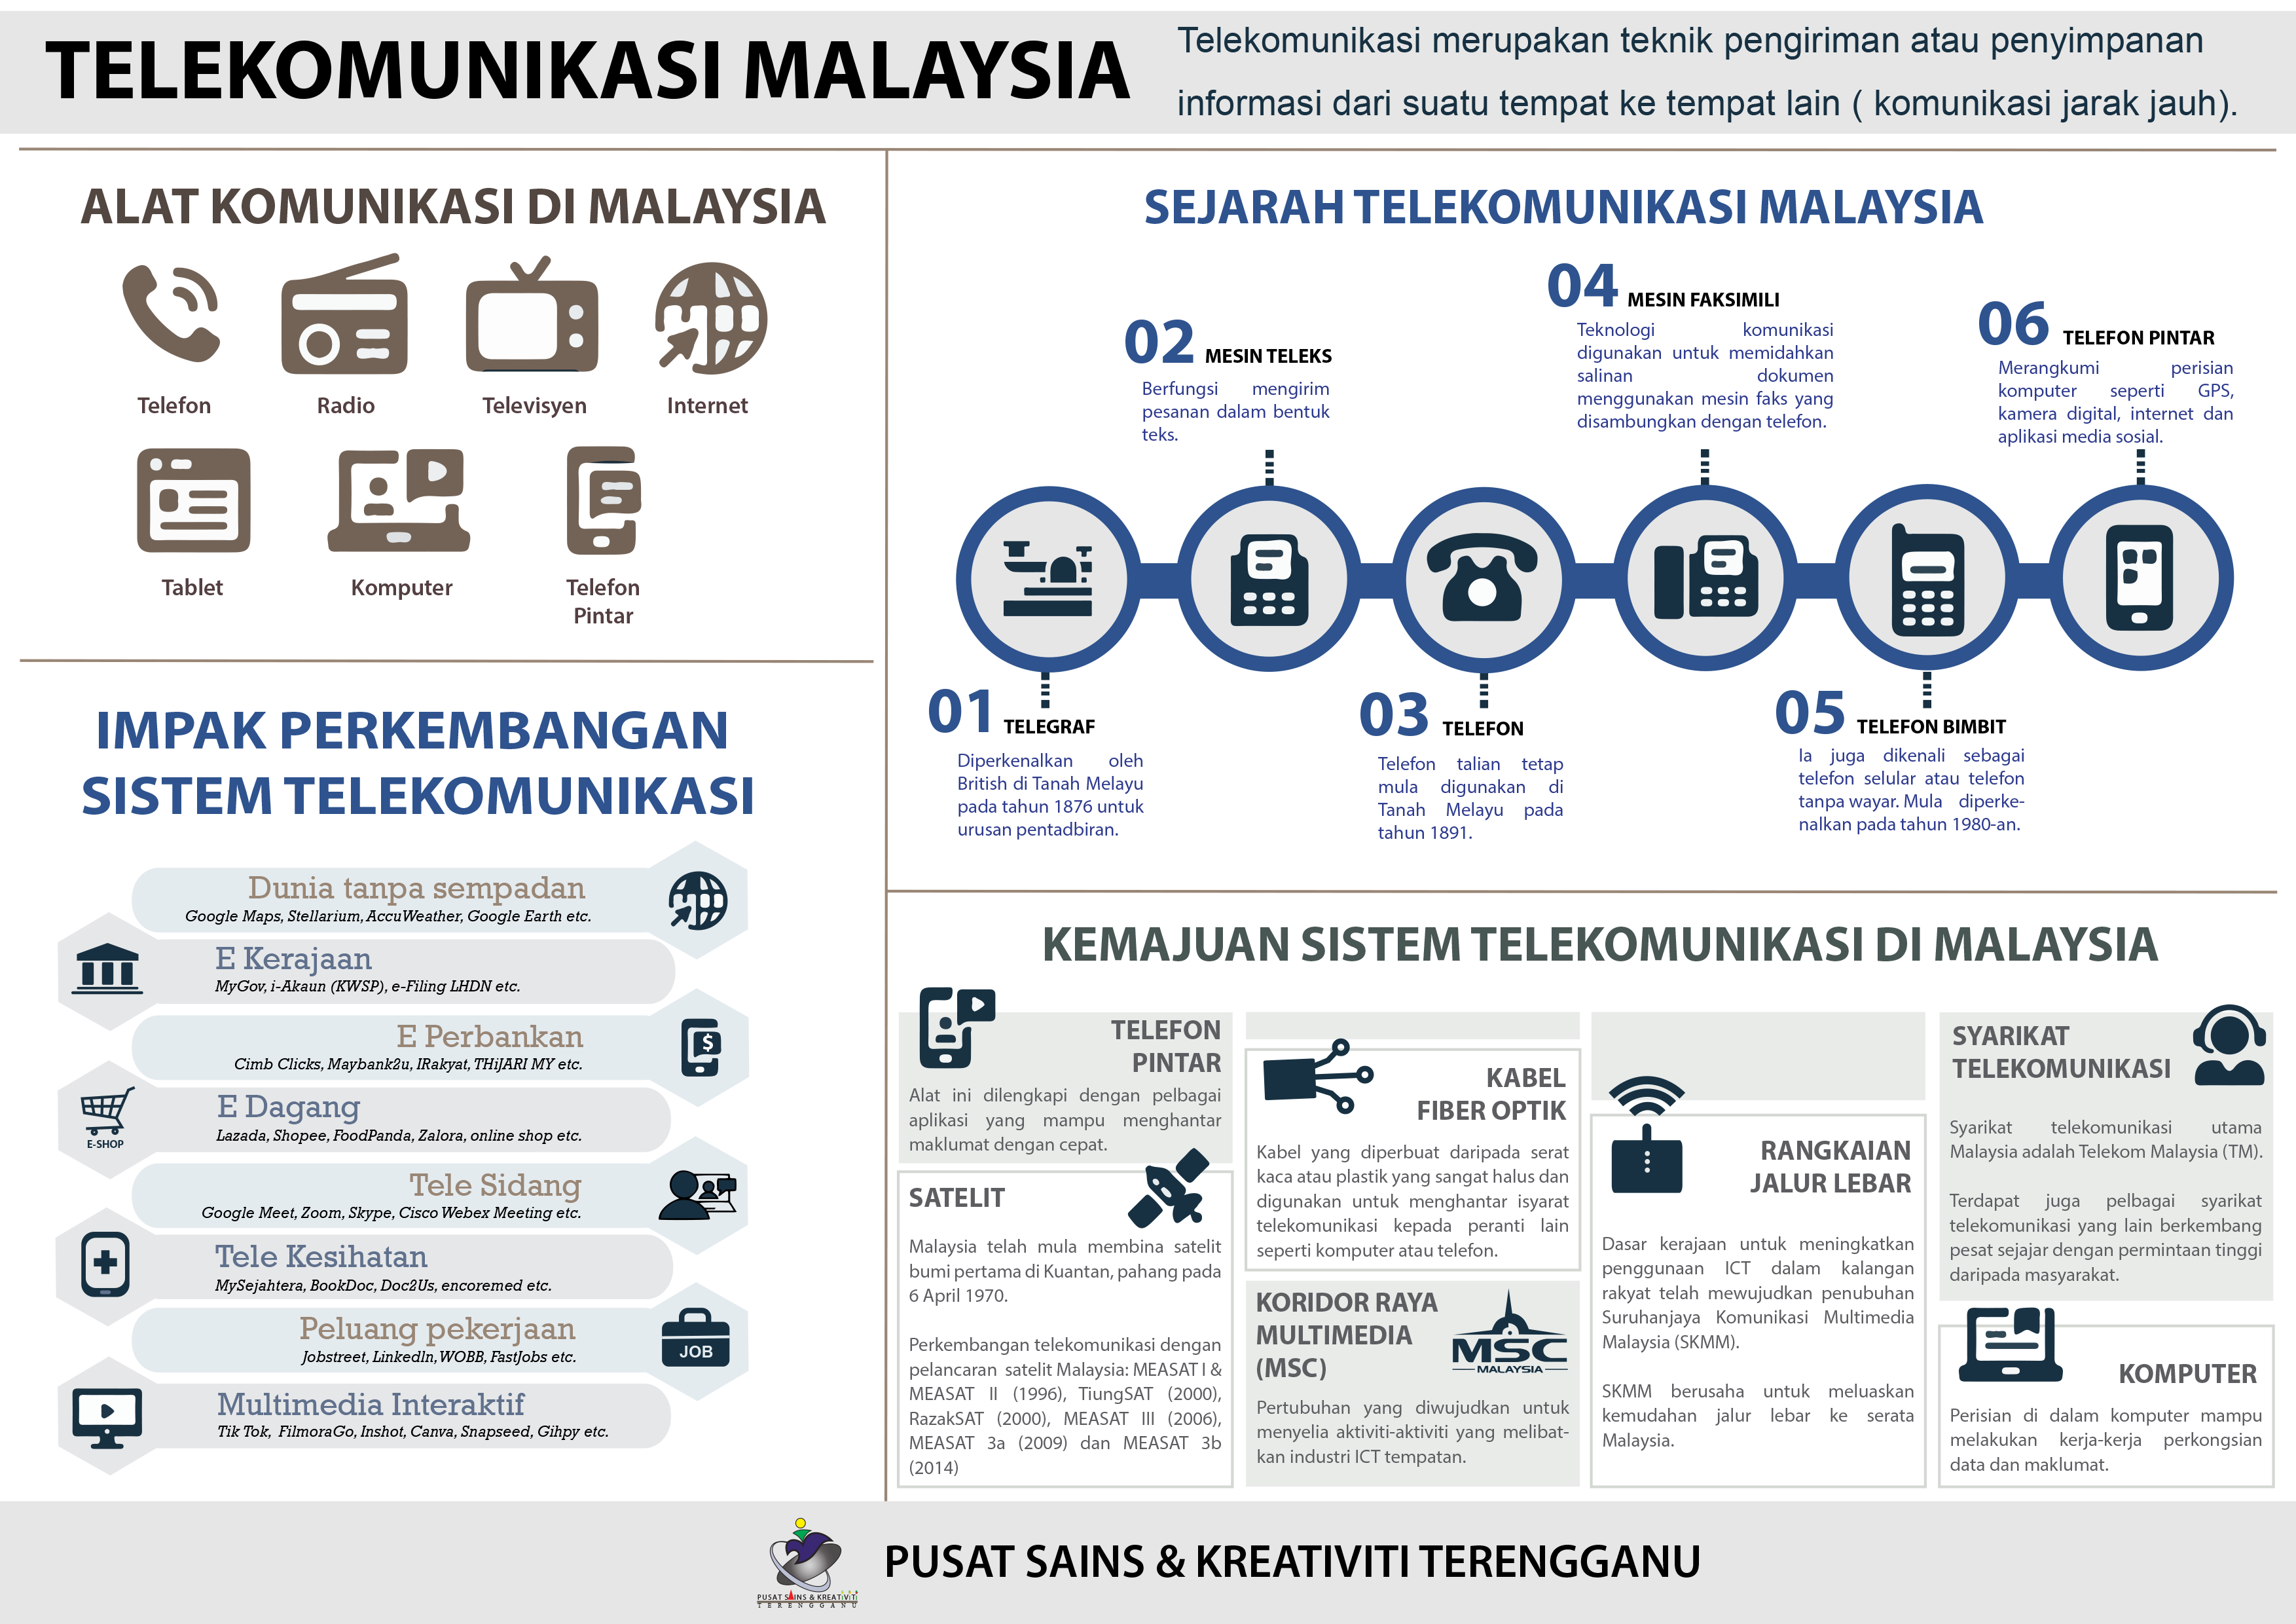 telekomunikasi malaysia